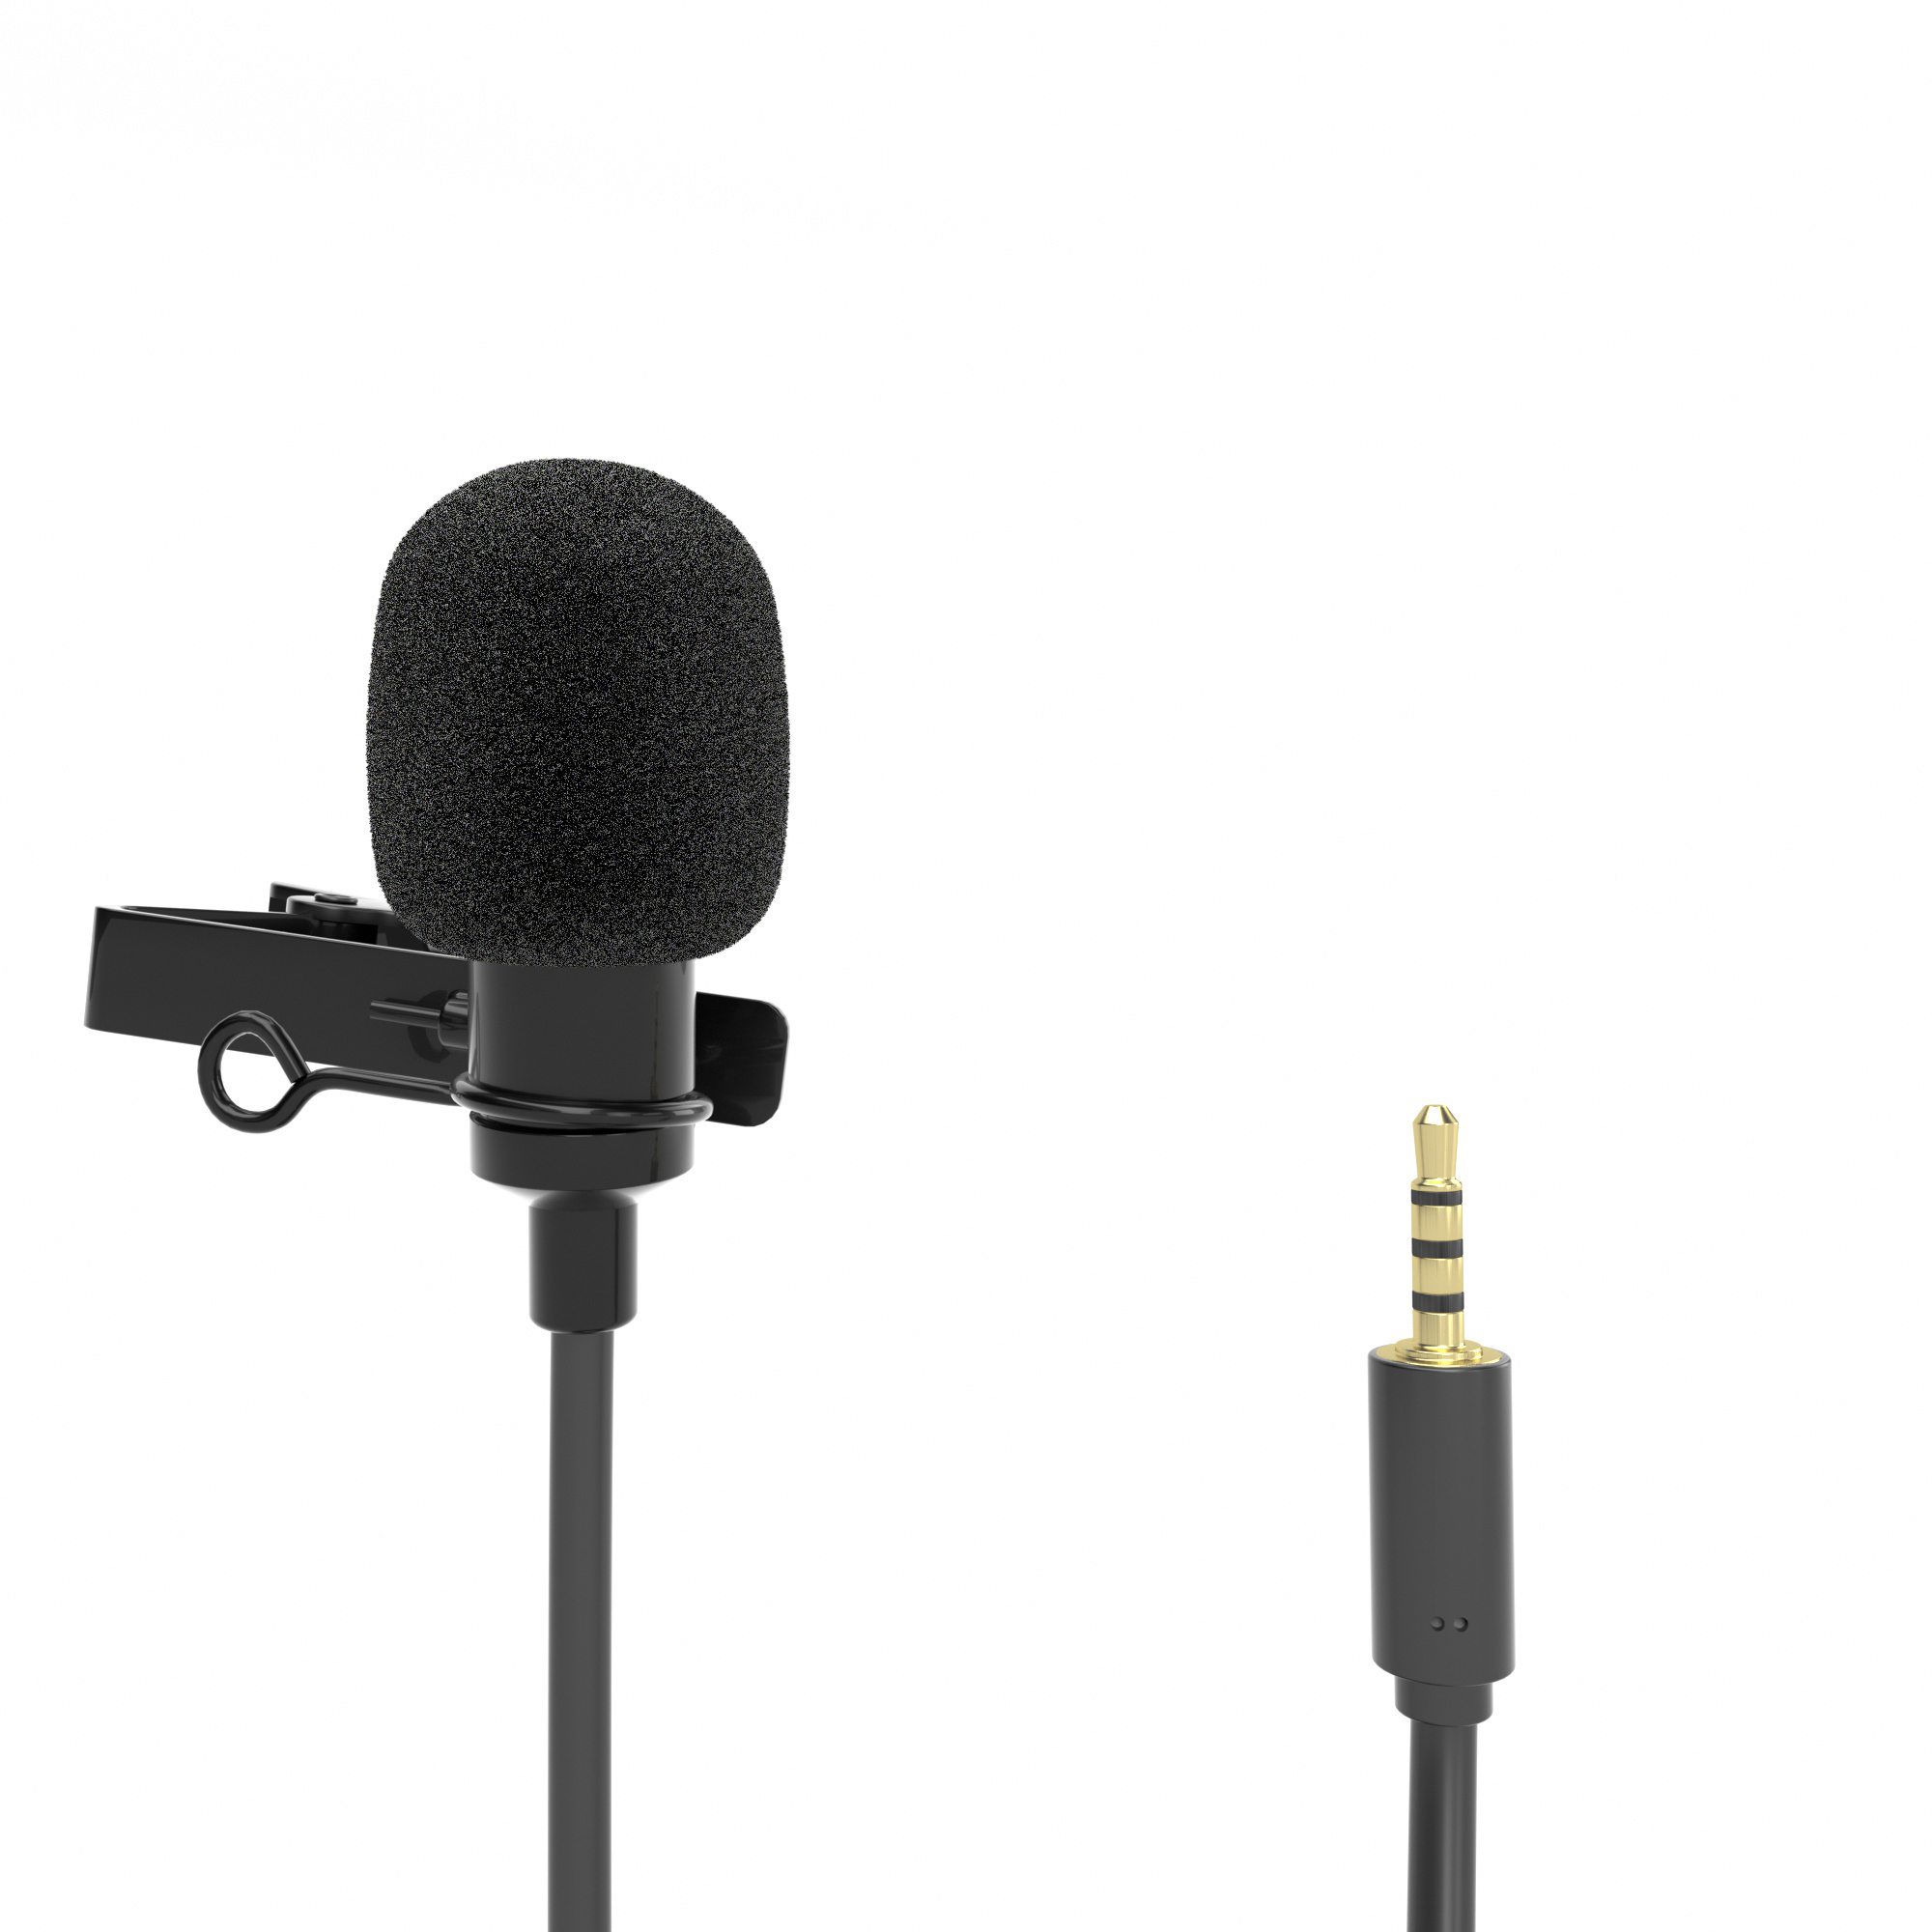 ayex Lavalier-Mikrofon perfekt für Smartphones - z.B. für Interviews, Livestreams u.v.m. geeignet - LV-1 3,5mm for Smartphone